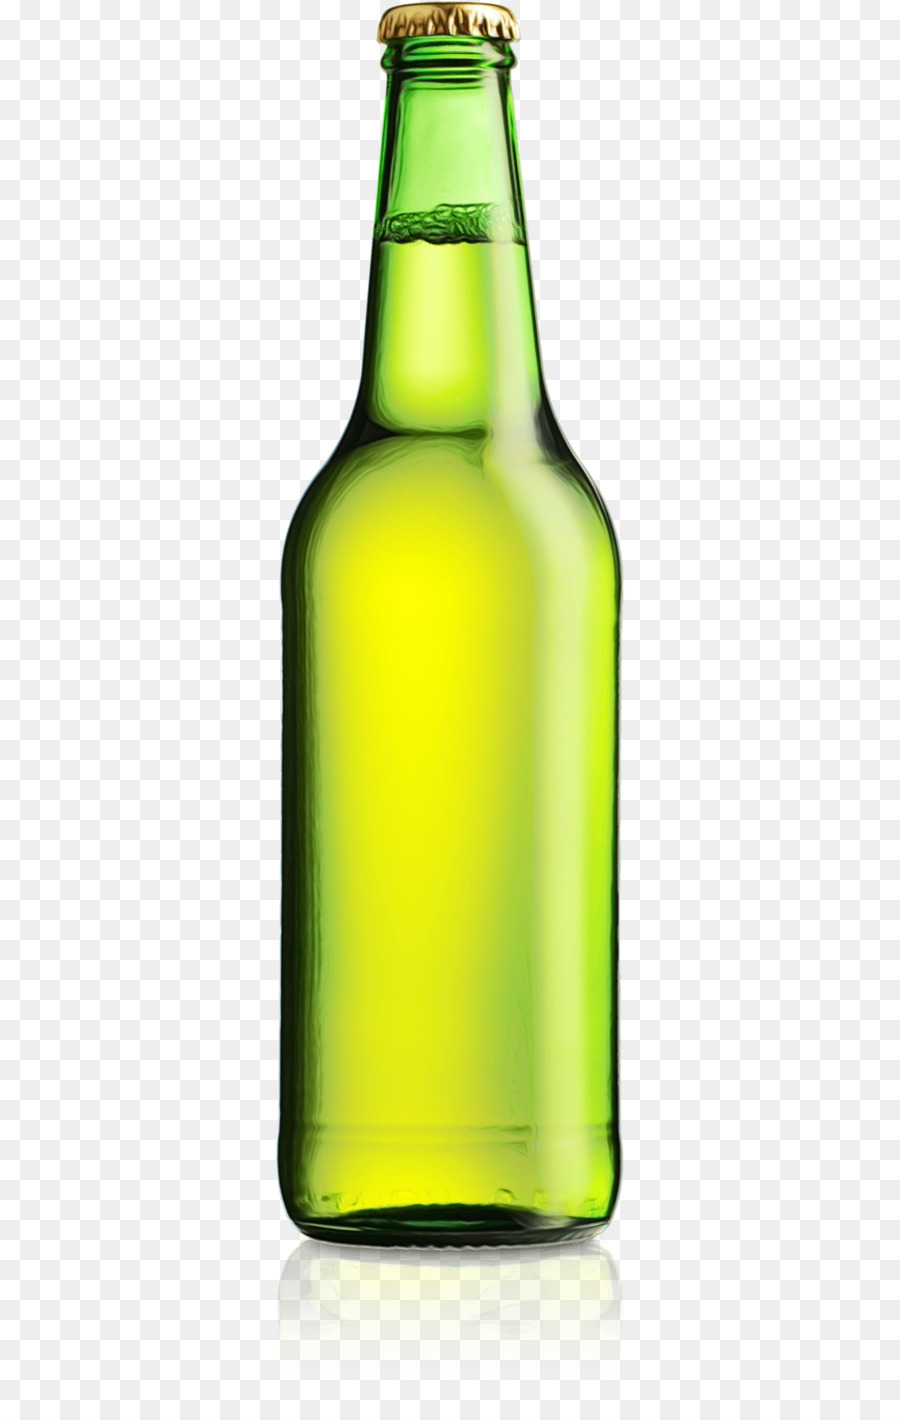 bottle glass bottle green beer bottle drink